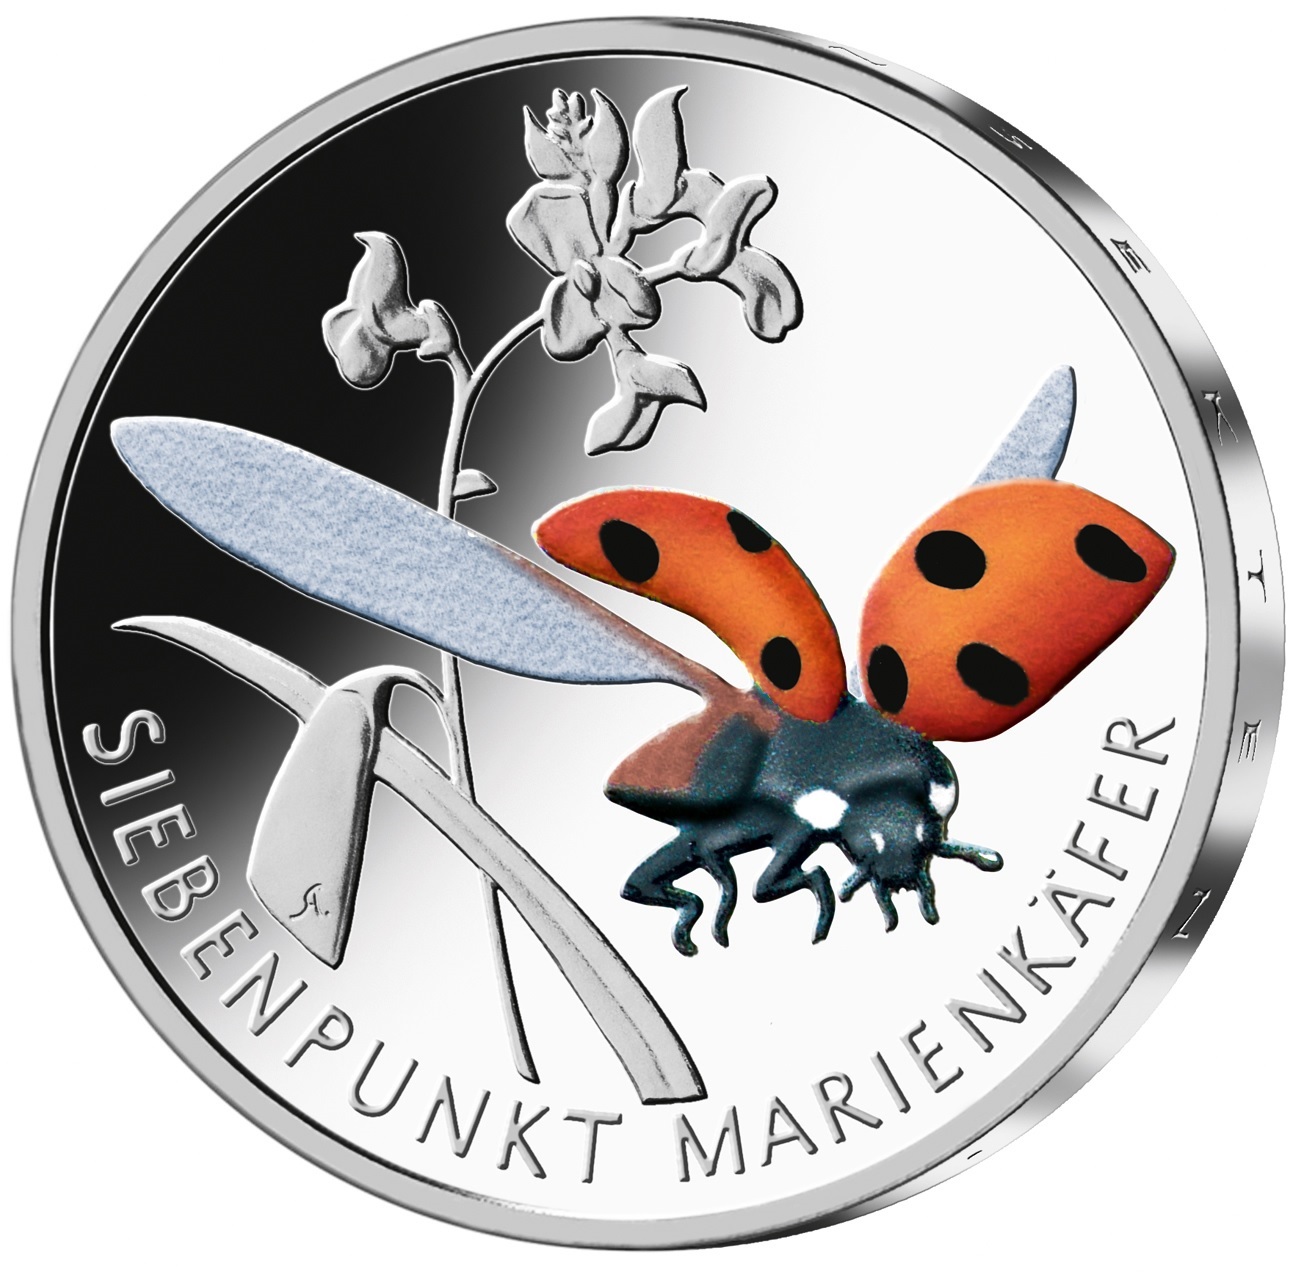 (EUR03.Proof.2023.90N123Q1S5) 5 euro Germany 2023 A Proof - Seven-spot ladybug Reverse (zoom)